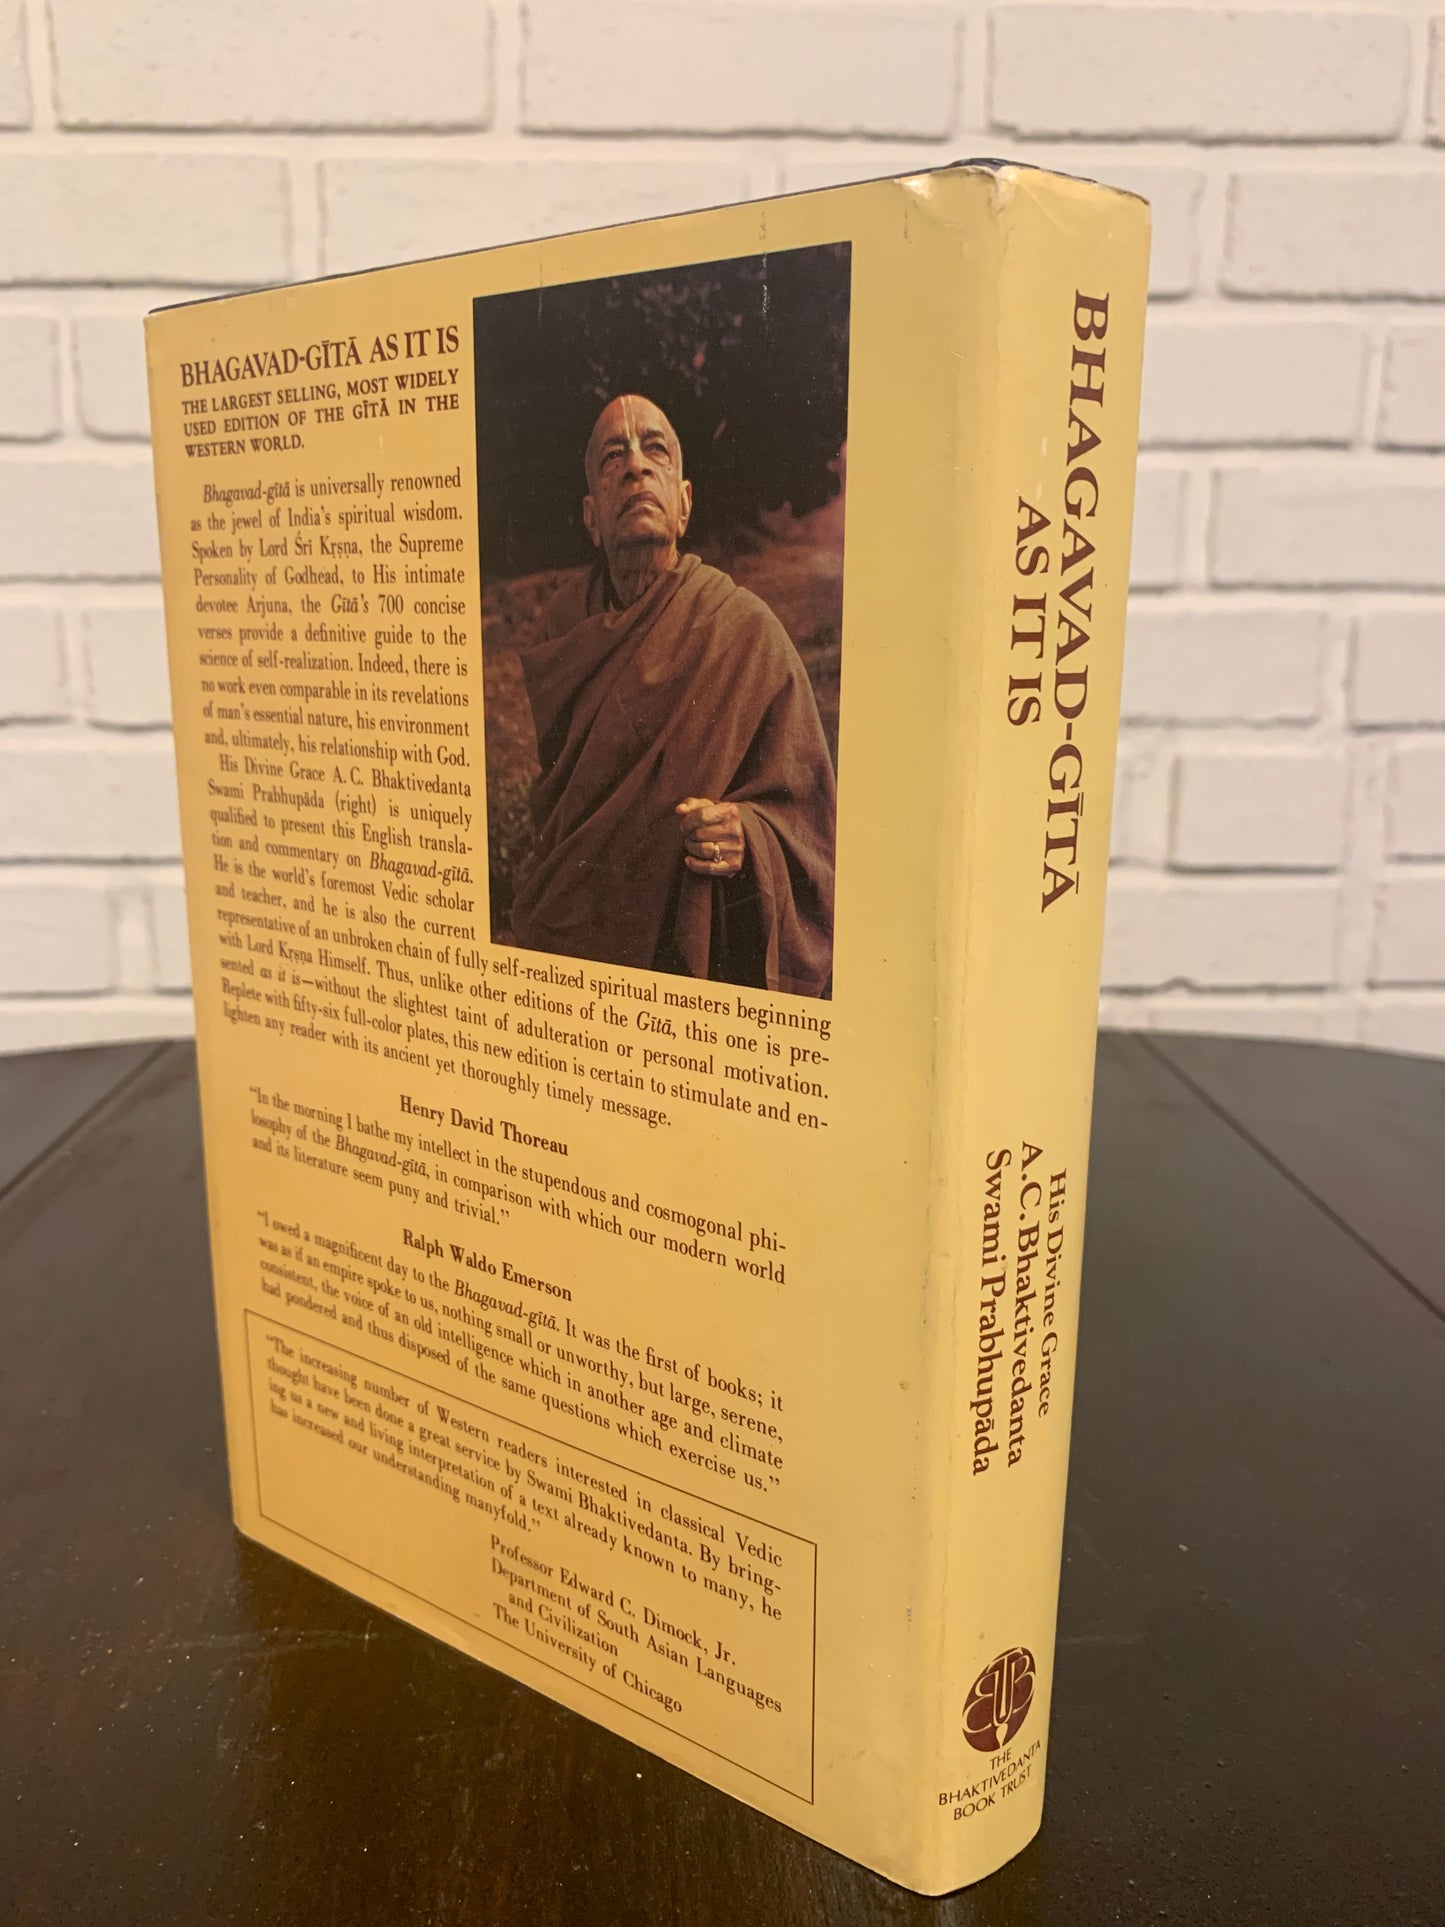 Bhagavad-Gita As It is: Abridged Edition 1976